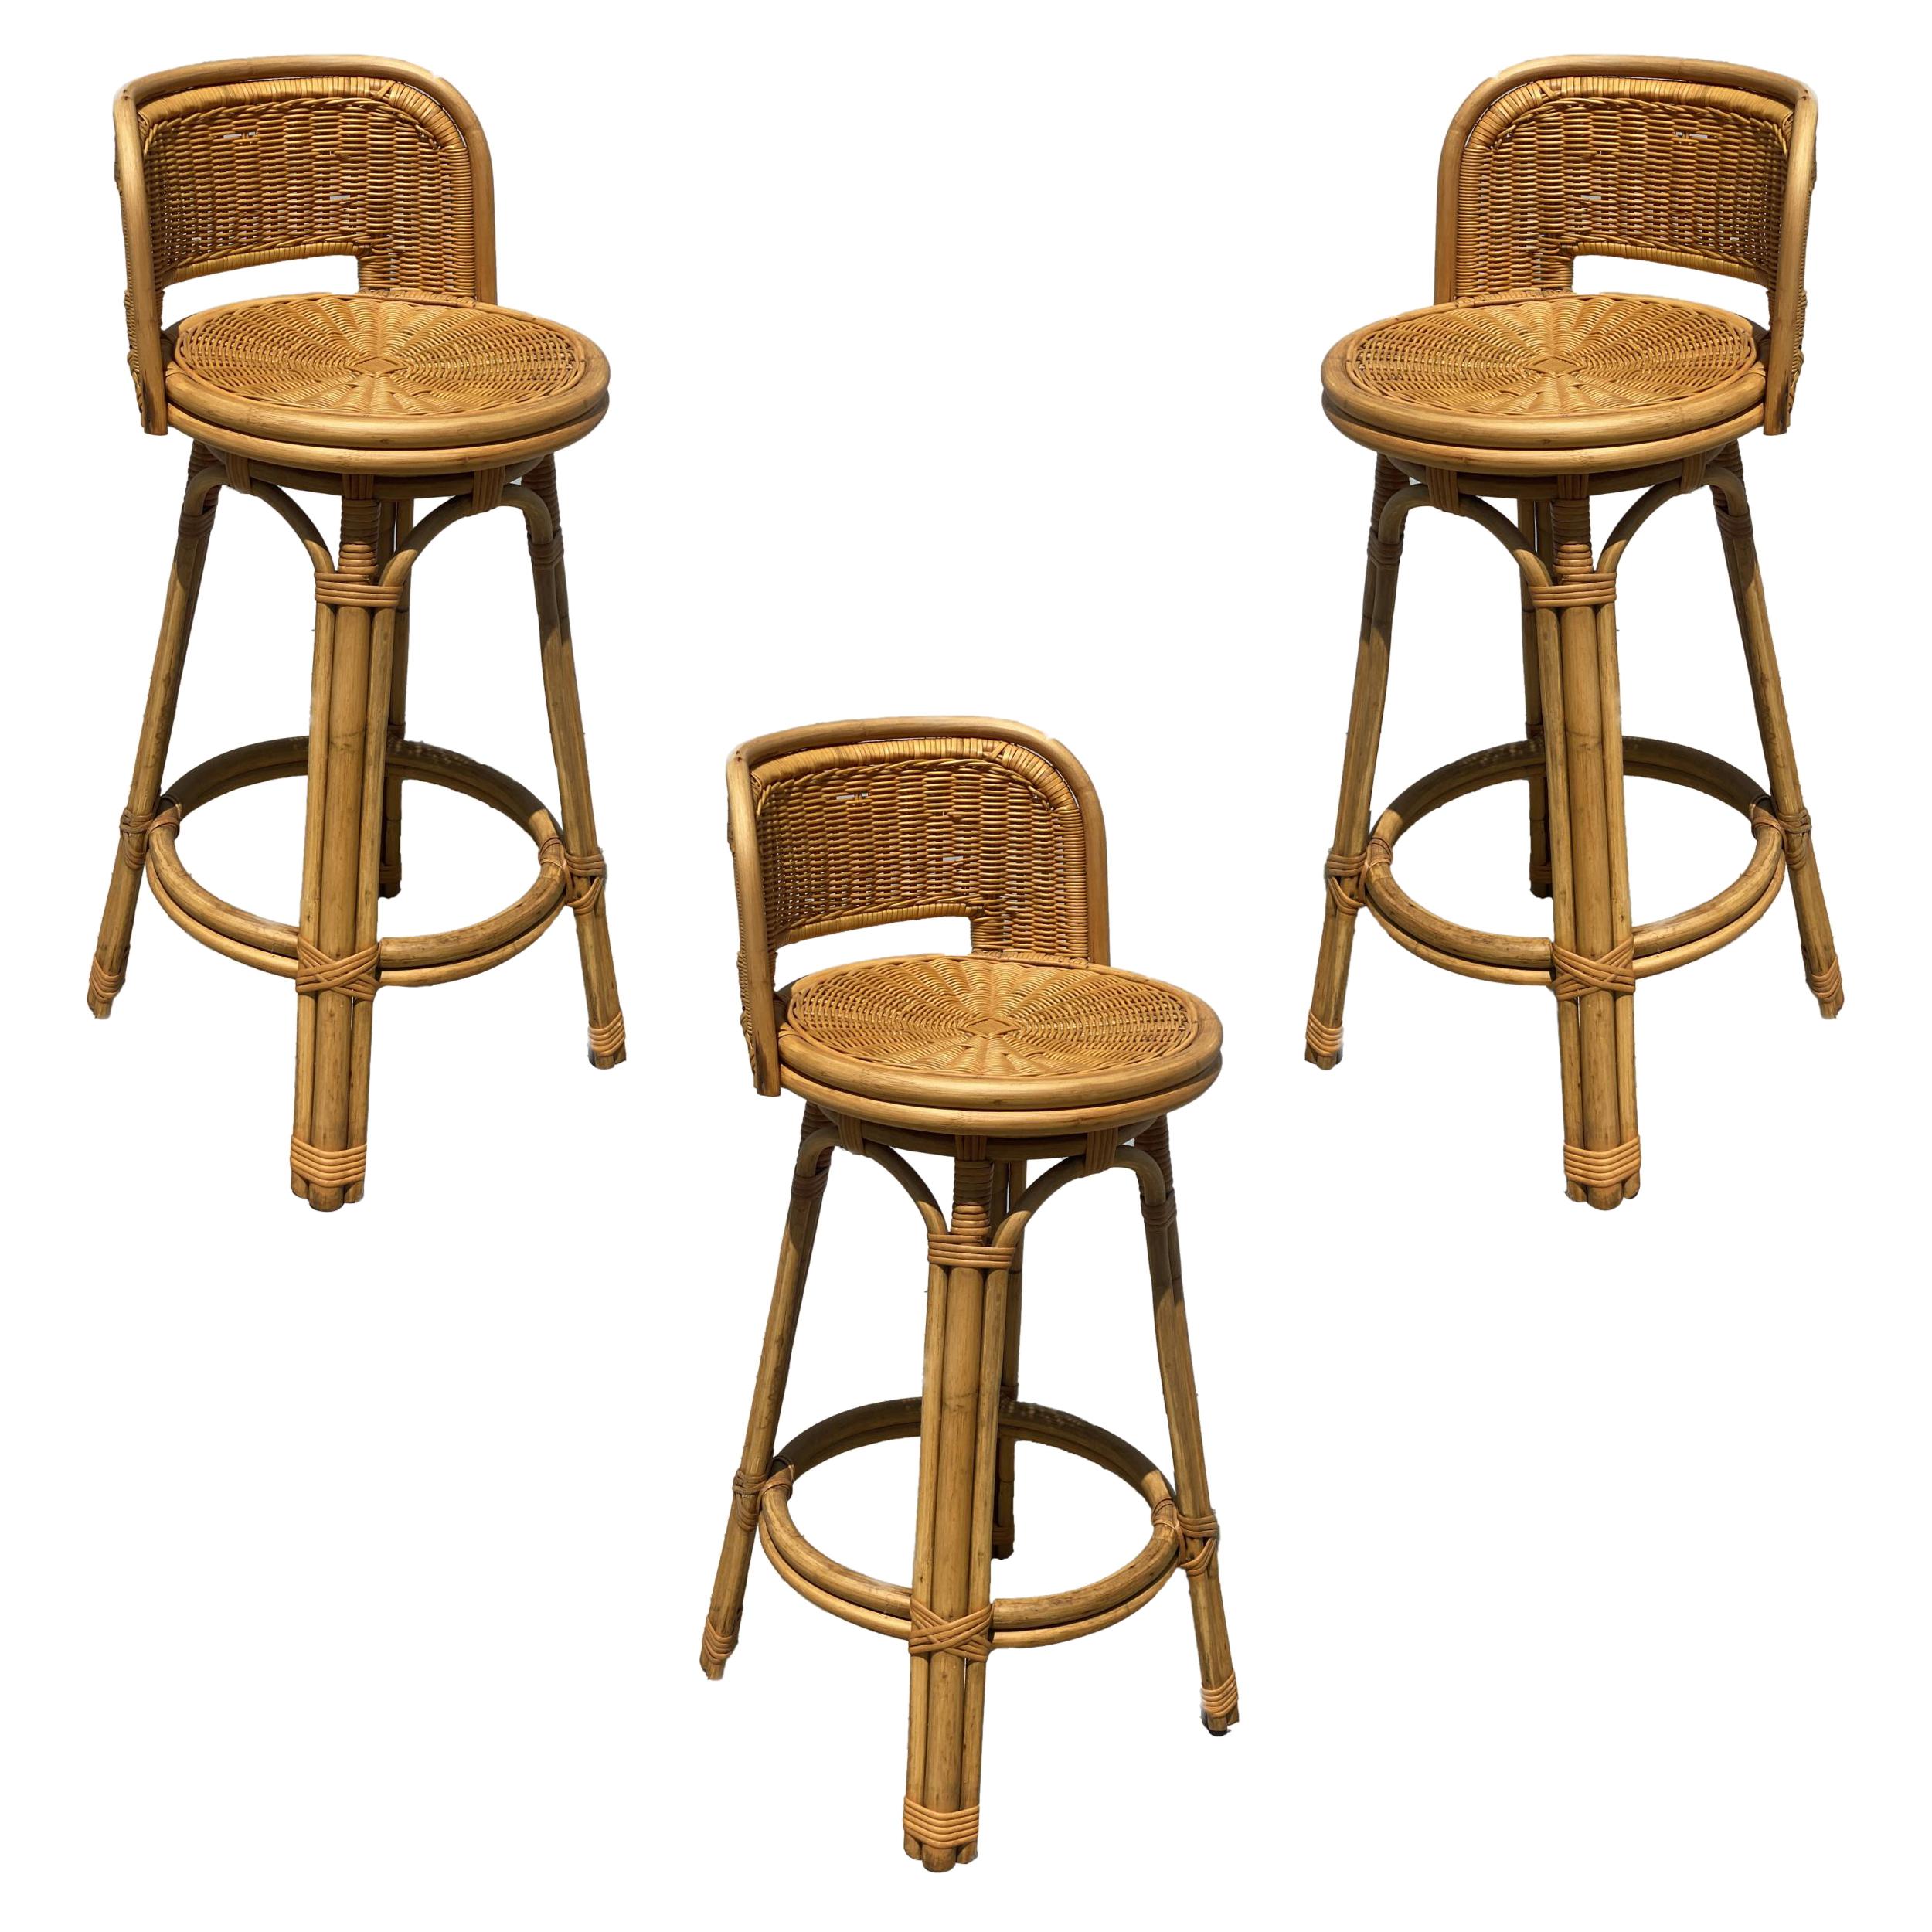 Mid Century Blond Bar Stool Set of Three with Woven Wicker Seats